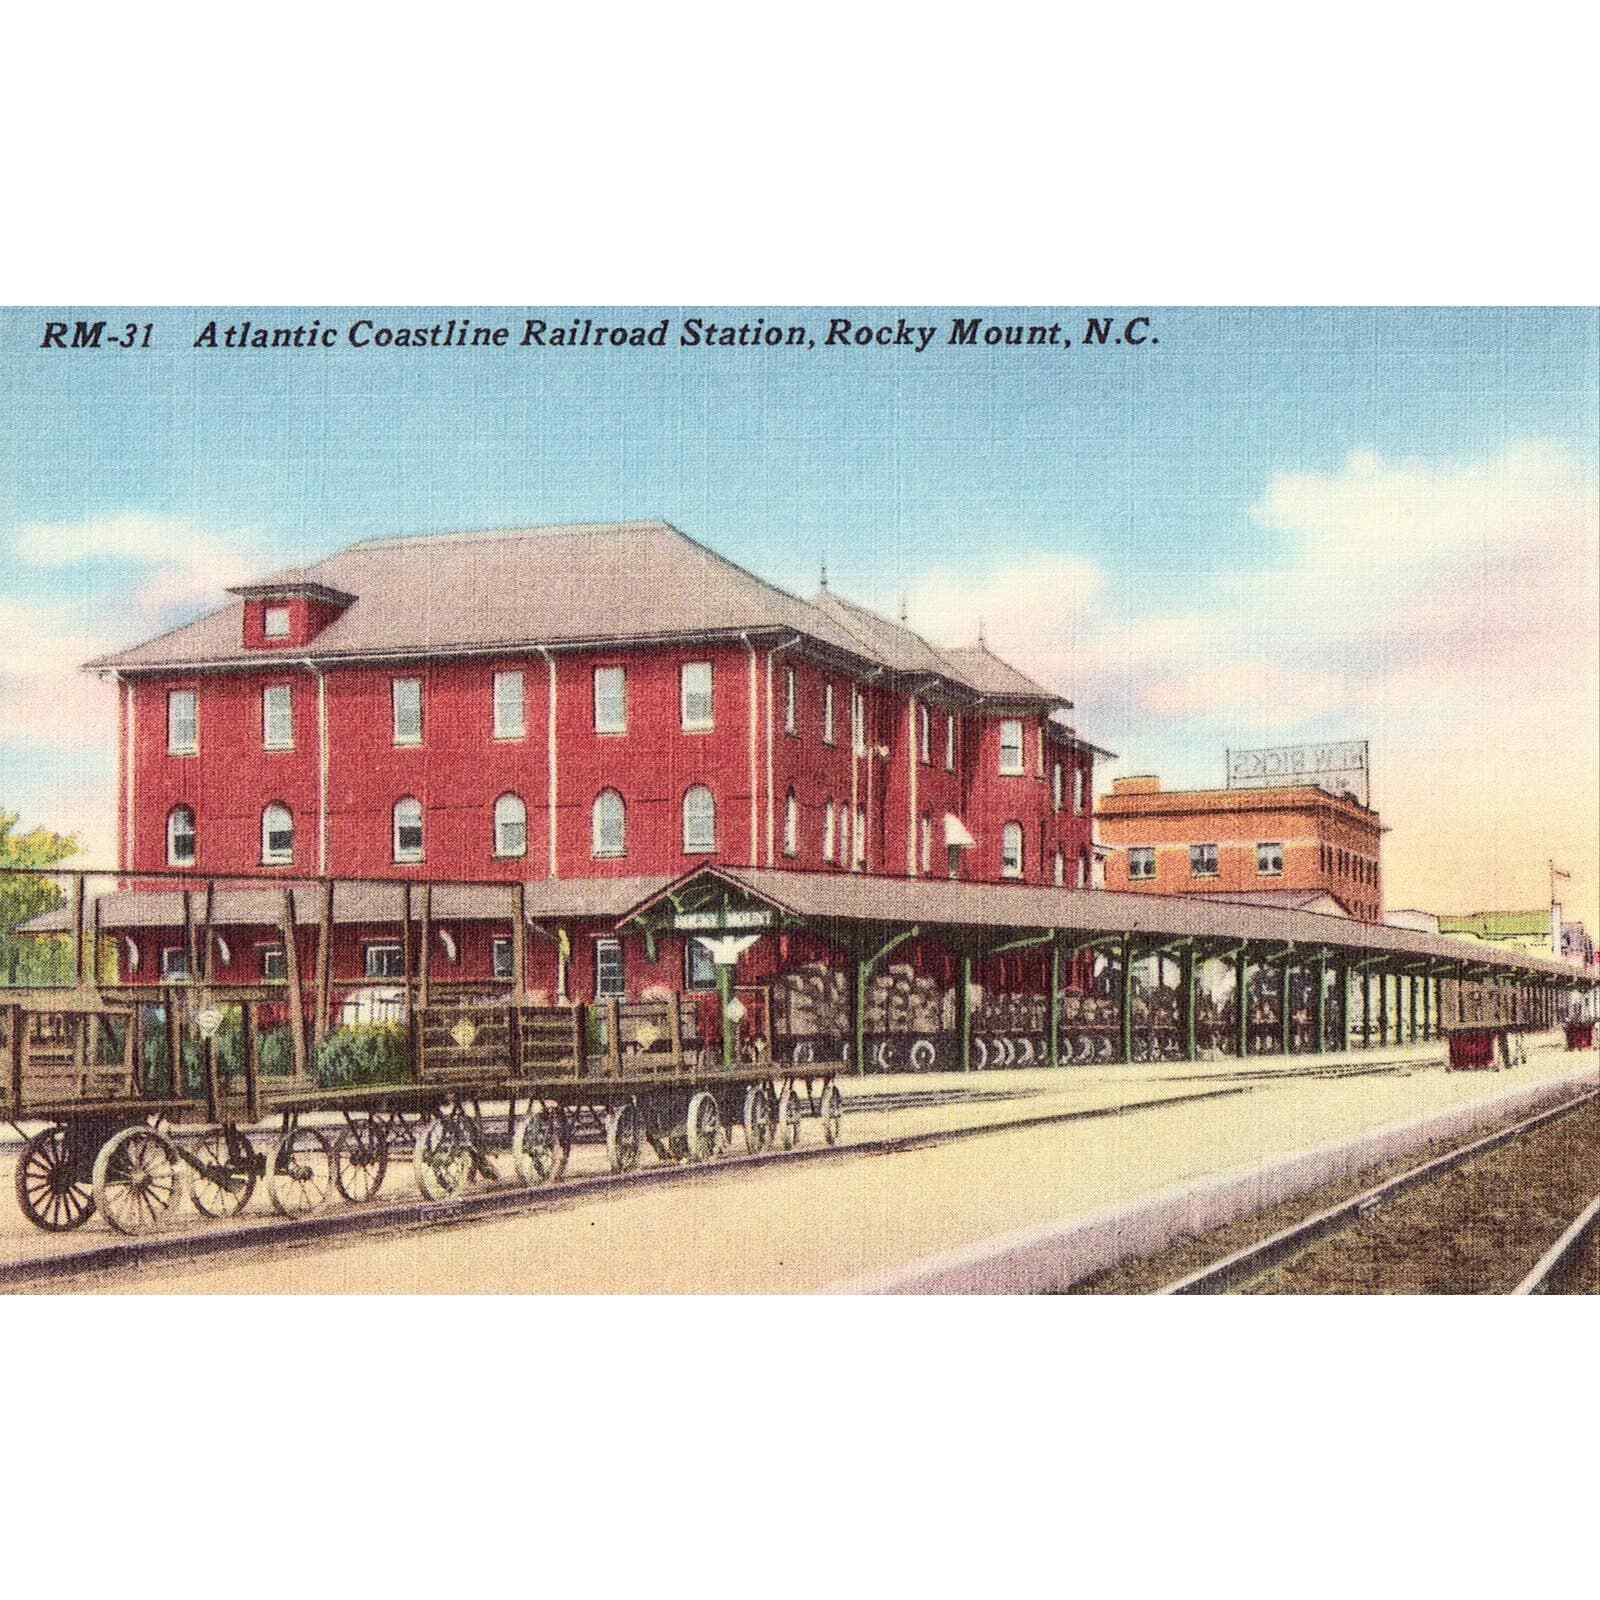 Atlantic Coastline Railroad Station - Rocky Mount,North Carolina